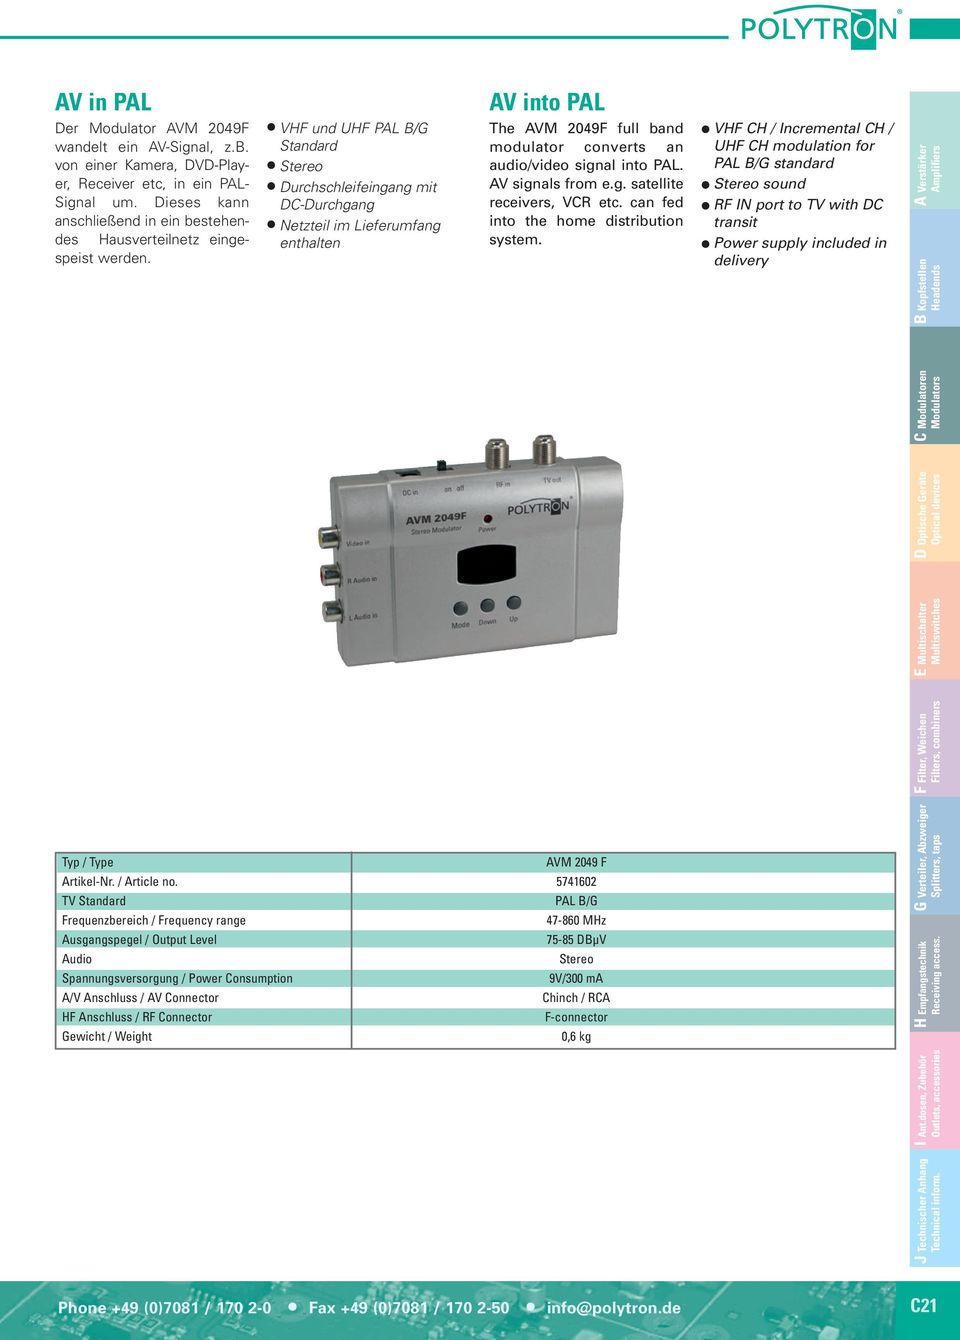 VHF und UHF PAL B/G Standard Stereo Durchschleifeingang mit DC-Durchgang Netzteil im Lieferumfang enthalten The AVM 2049F full band modulator converts an audio/video signal into PAL.